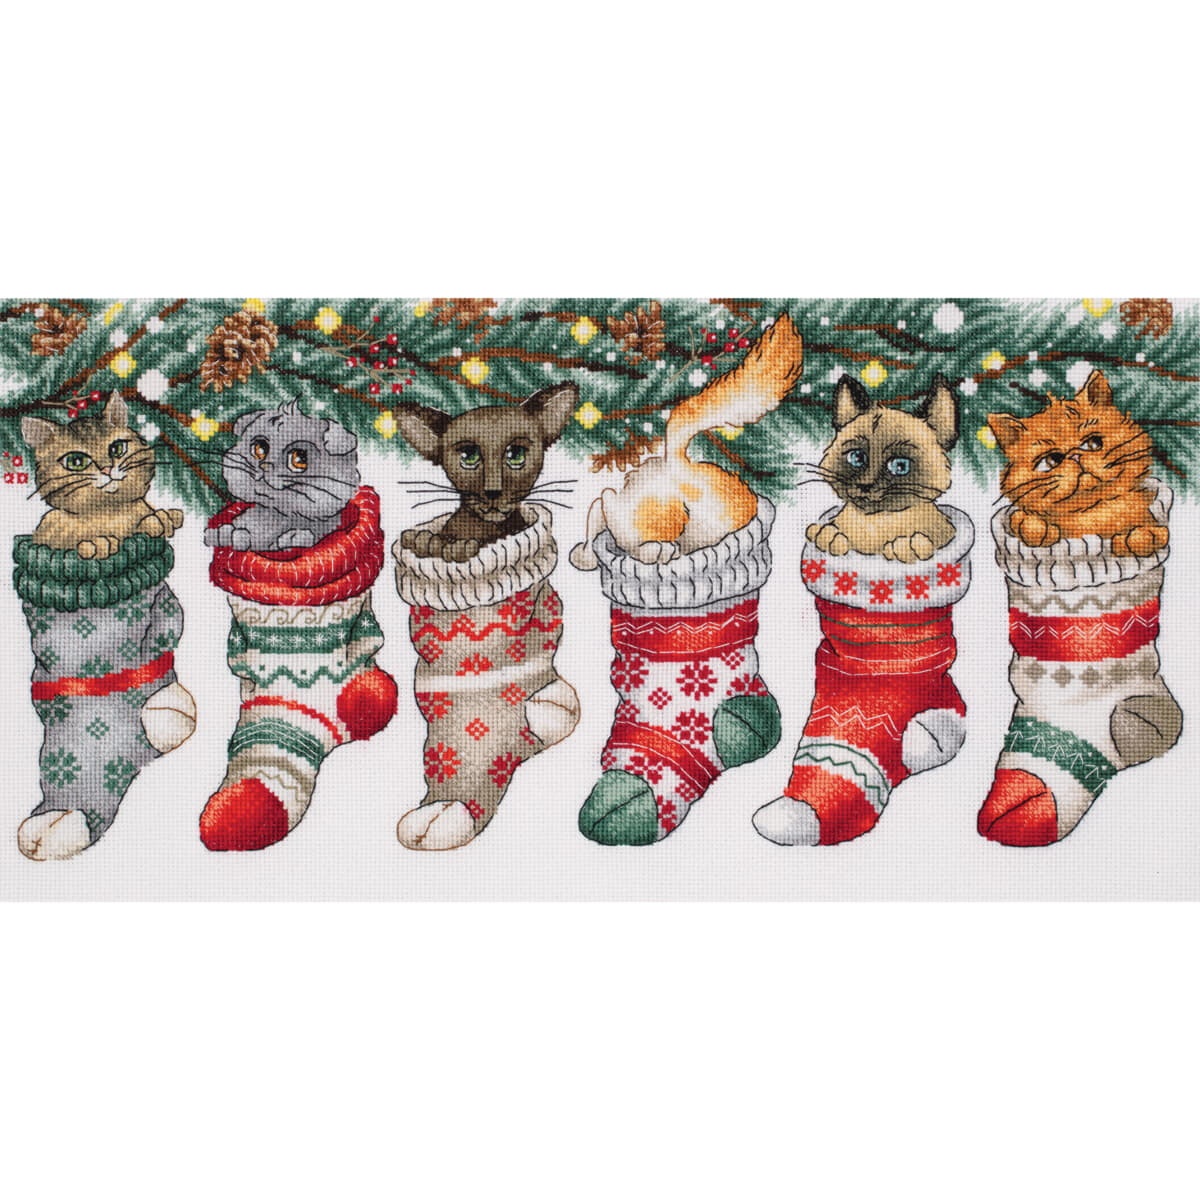 Panna counted cross stitch kit "Christmas Cute...